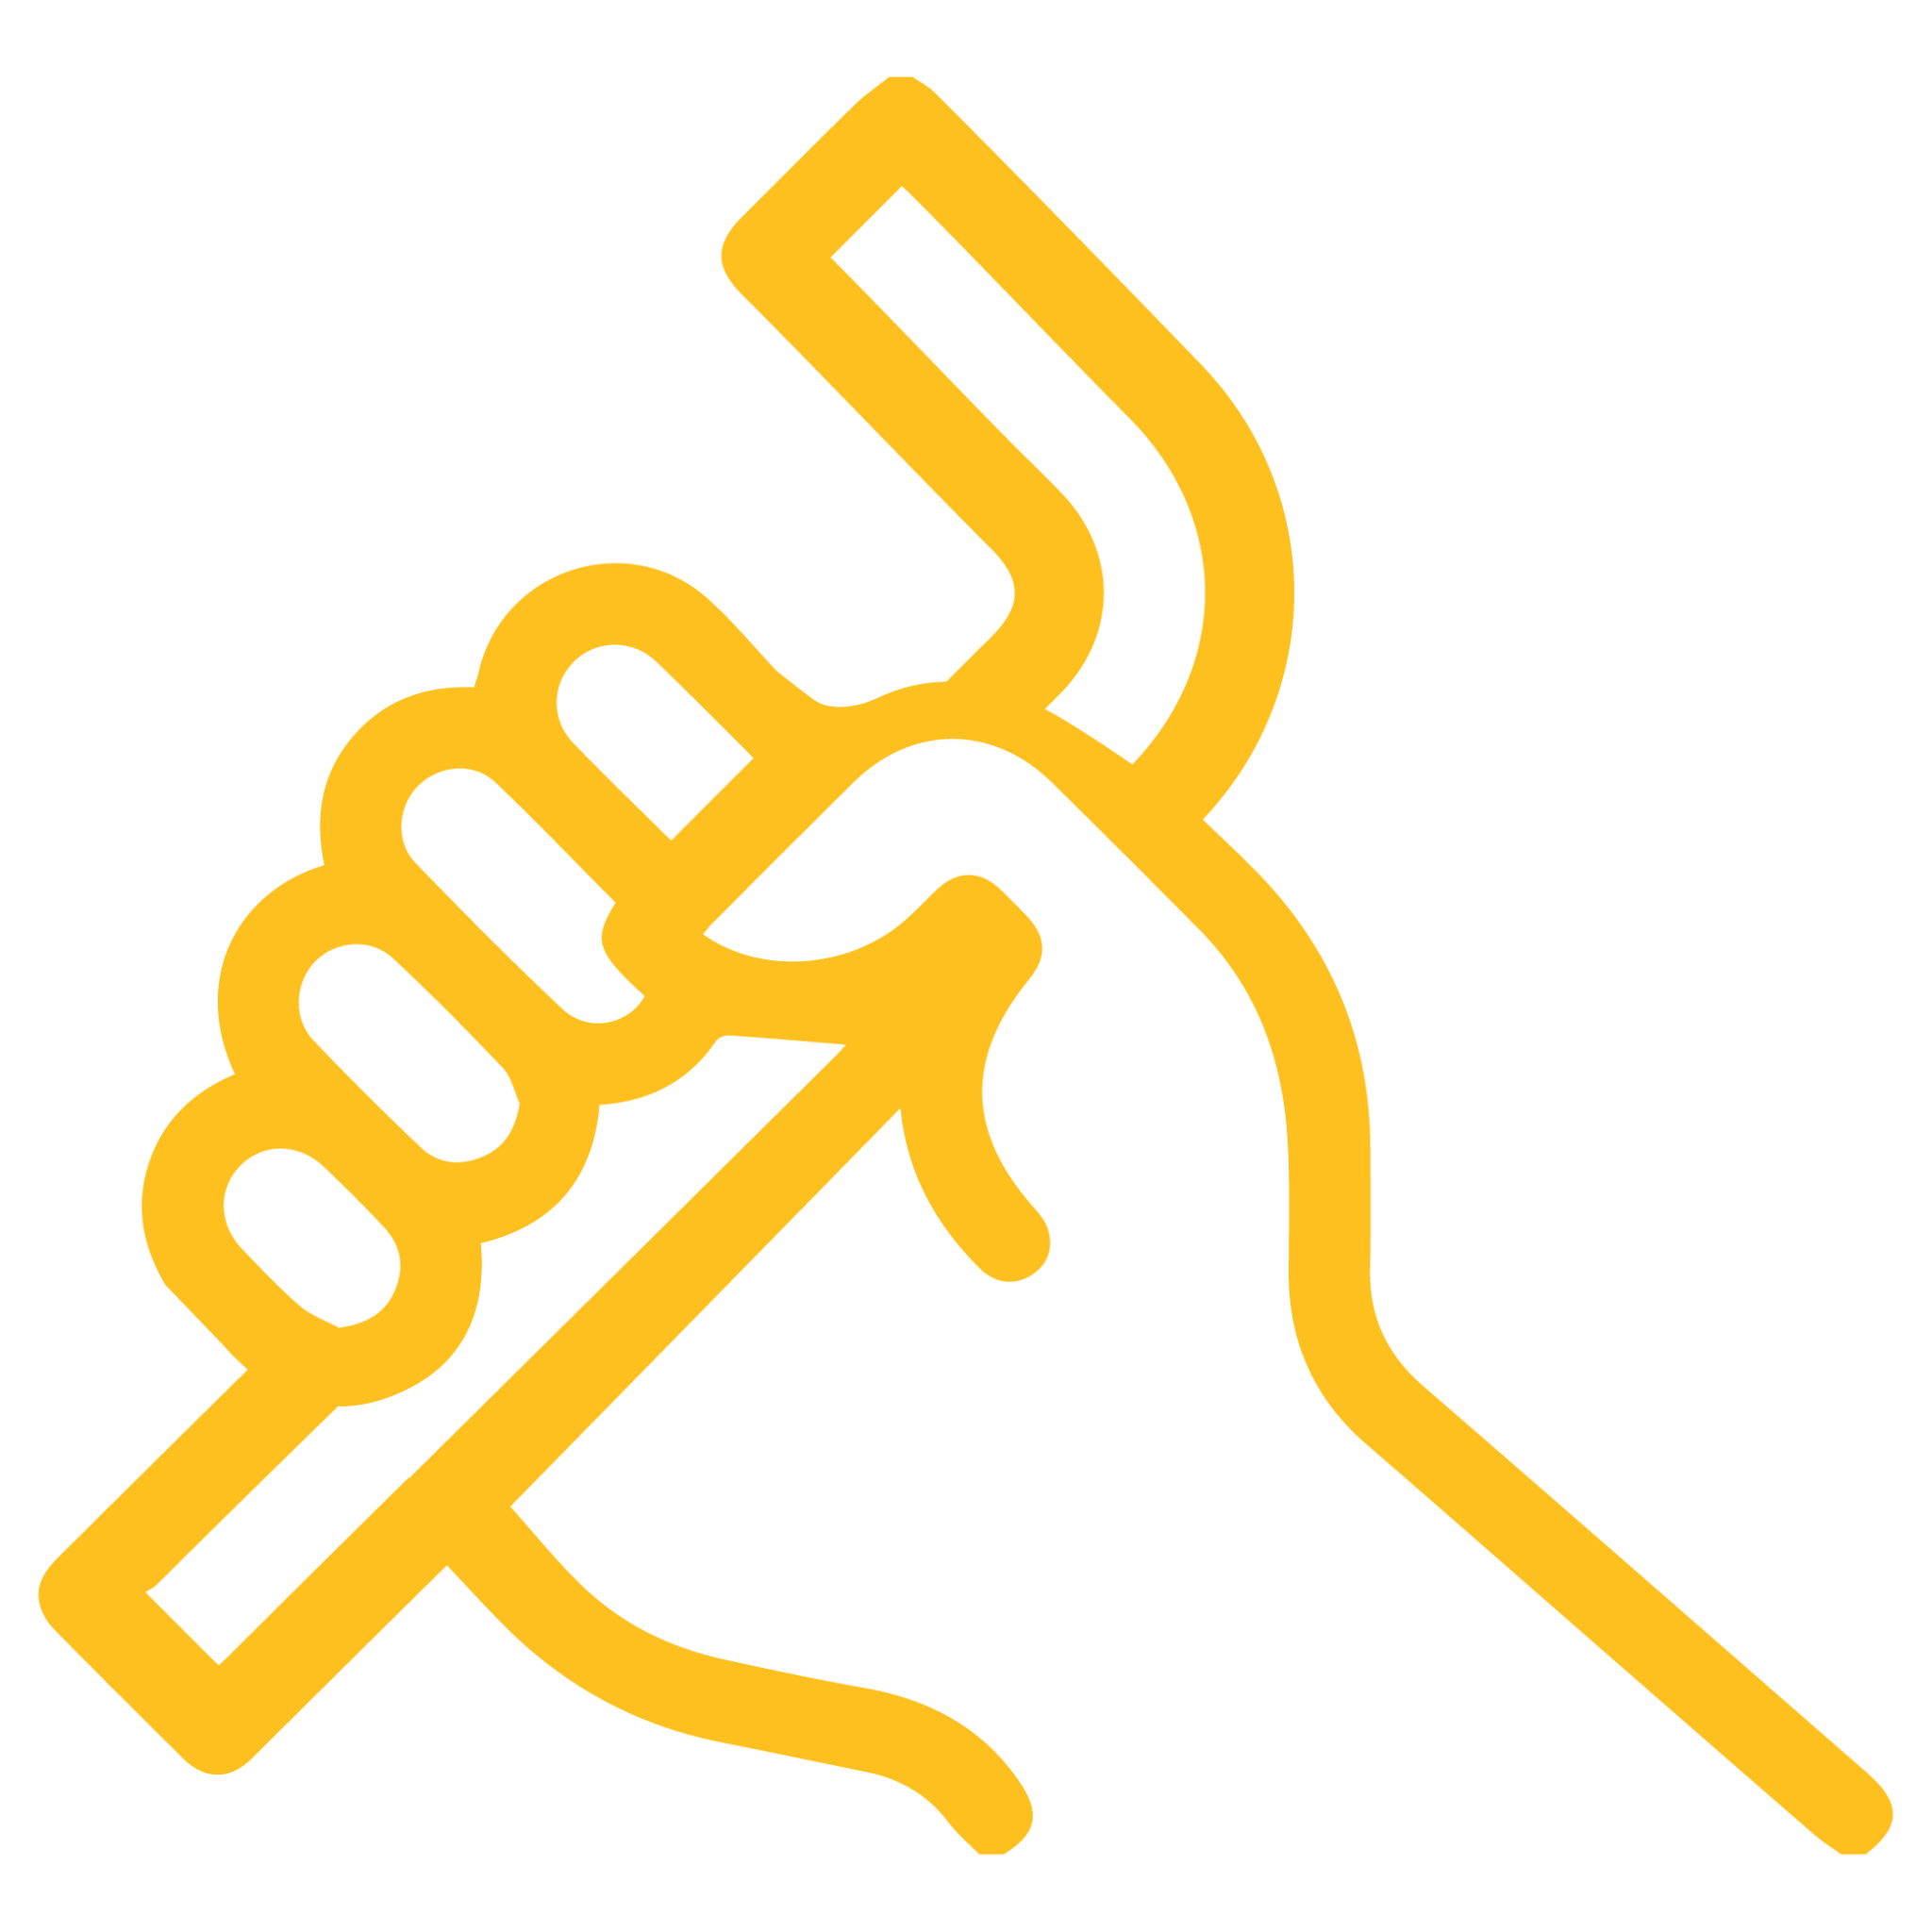 Fist holding Allan Key Symbol